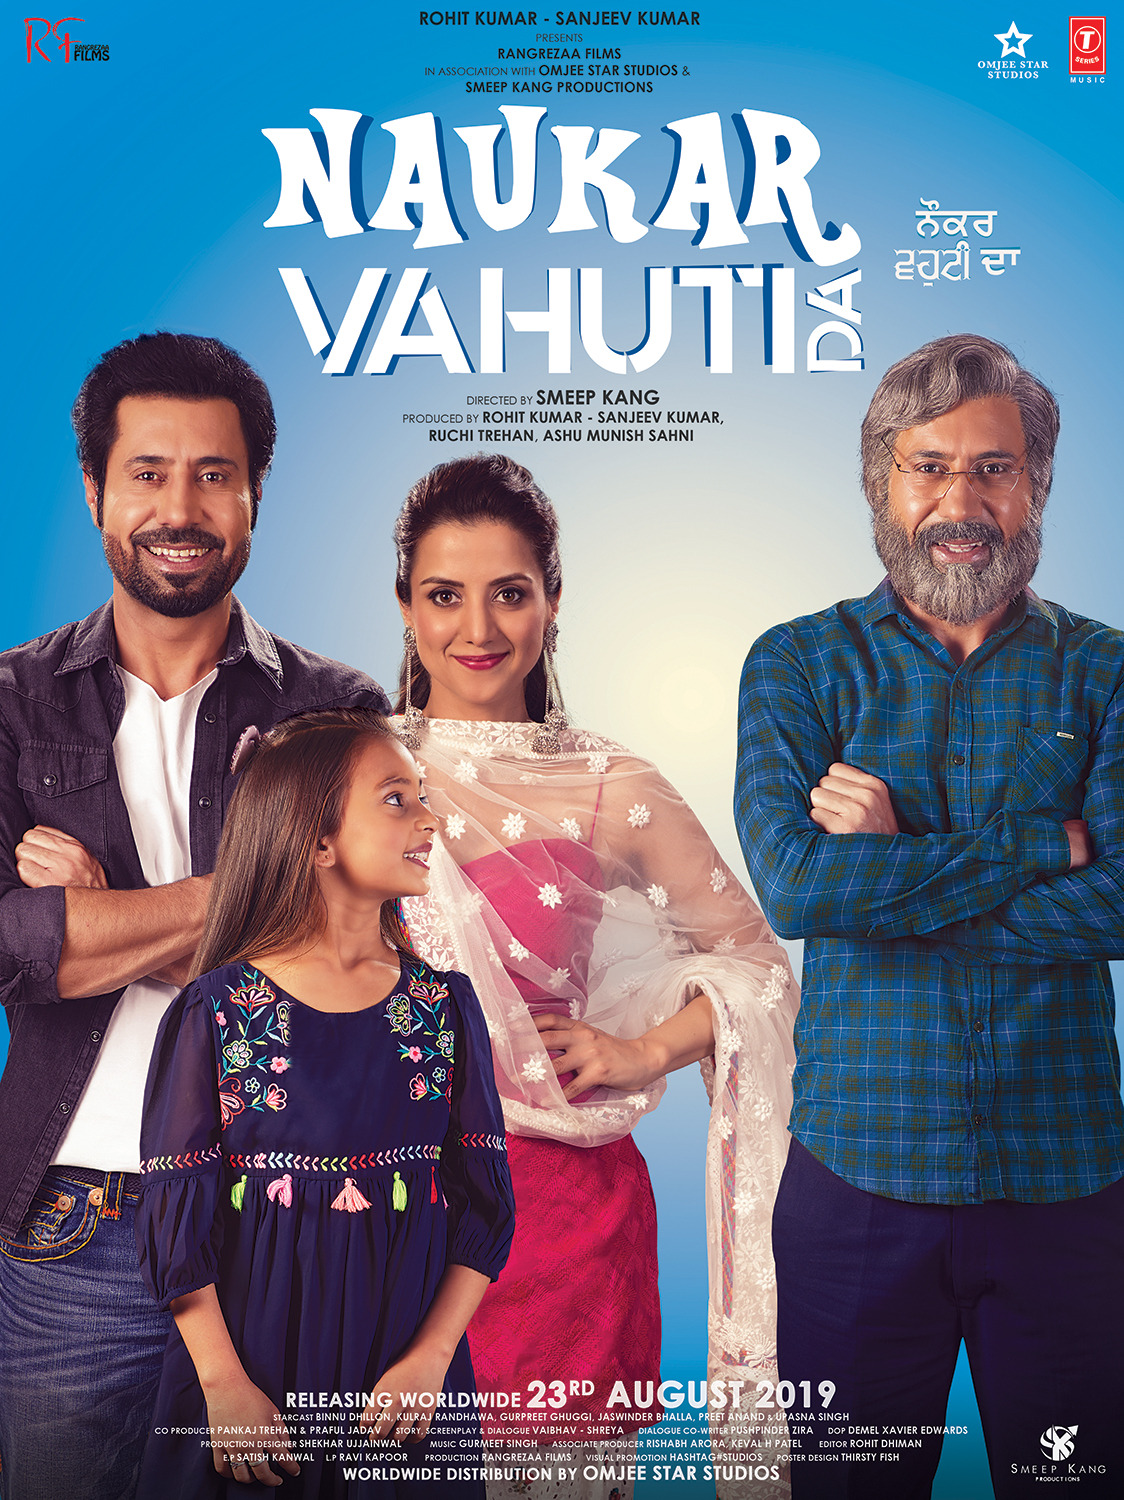 Extra Large Movie Poster Image for Naukar Vahuti Da (#1 of 3)